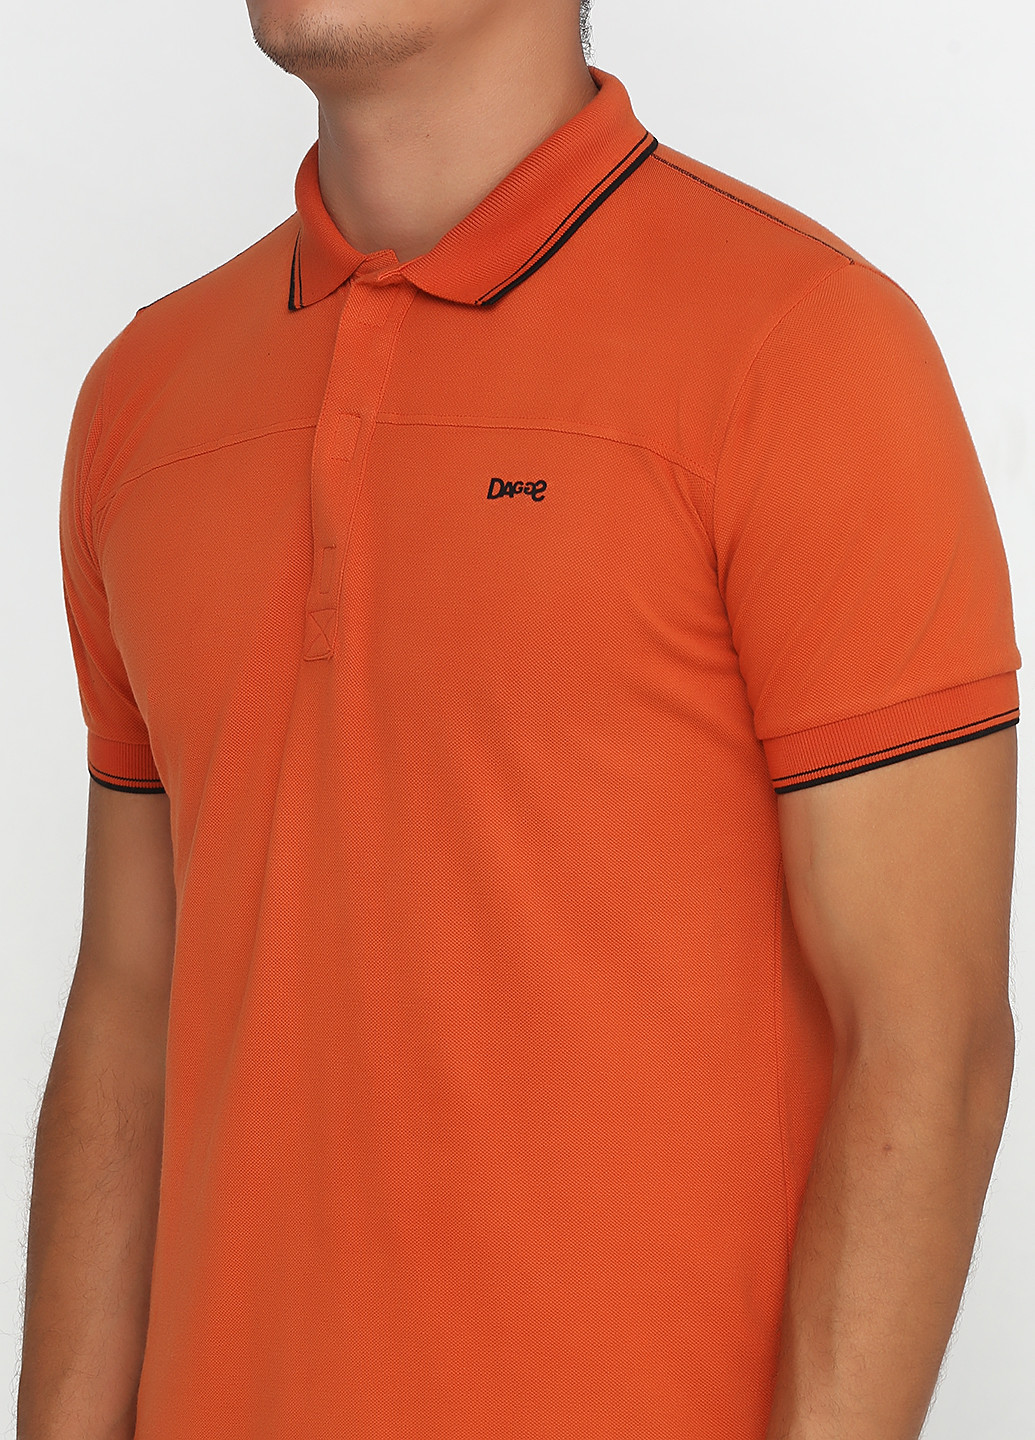 Оранжевая футболка-поло для мужчин Daggs однотонная